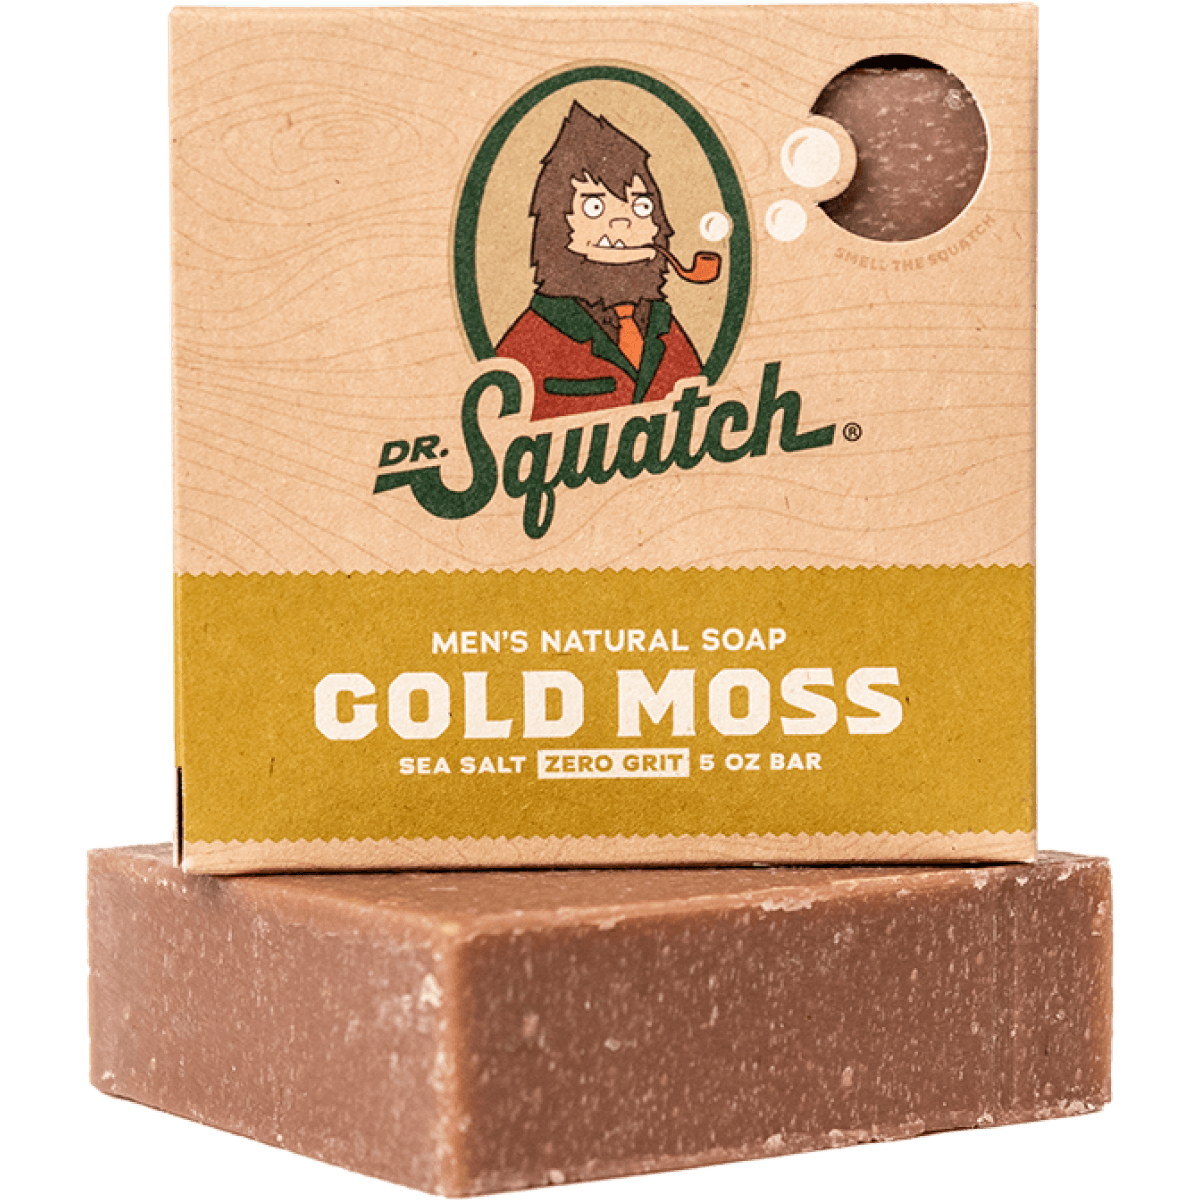  Dr. Squatch Men's Natural Bar Soap - Fresh Full